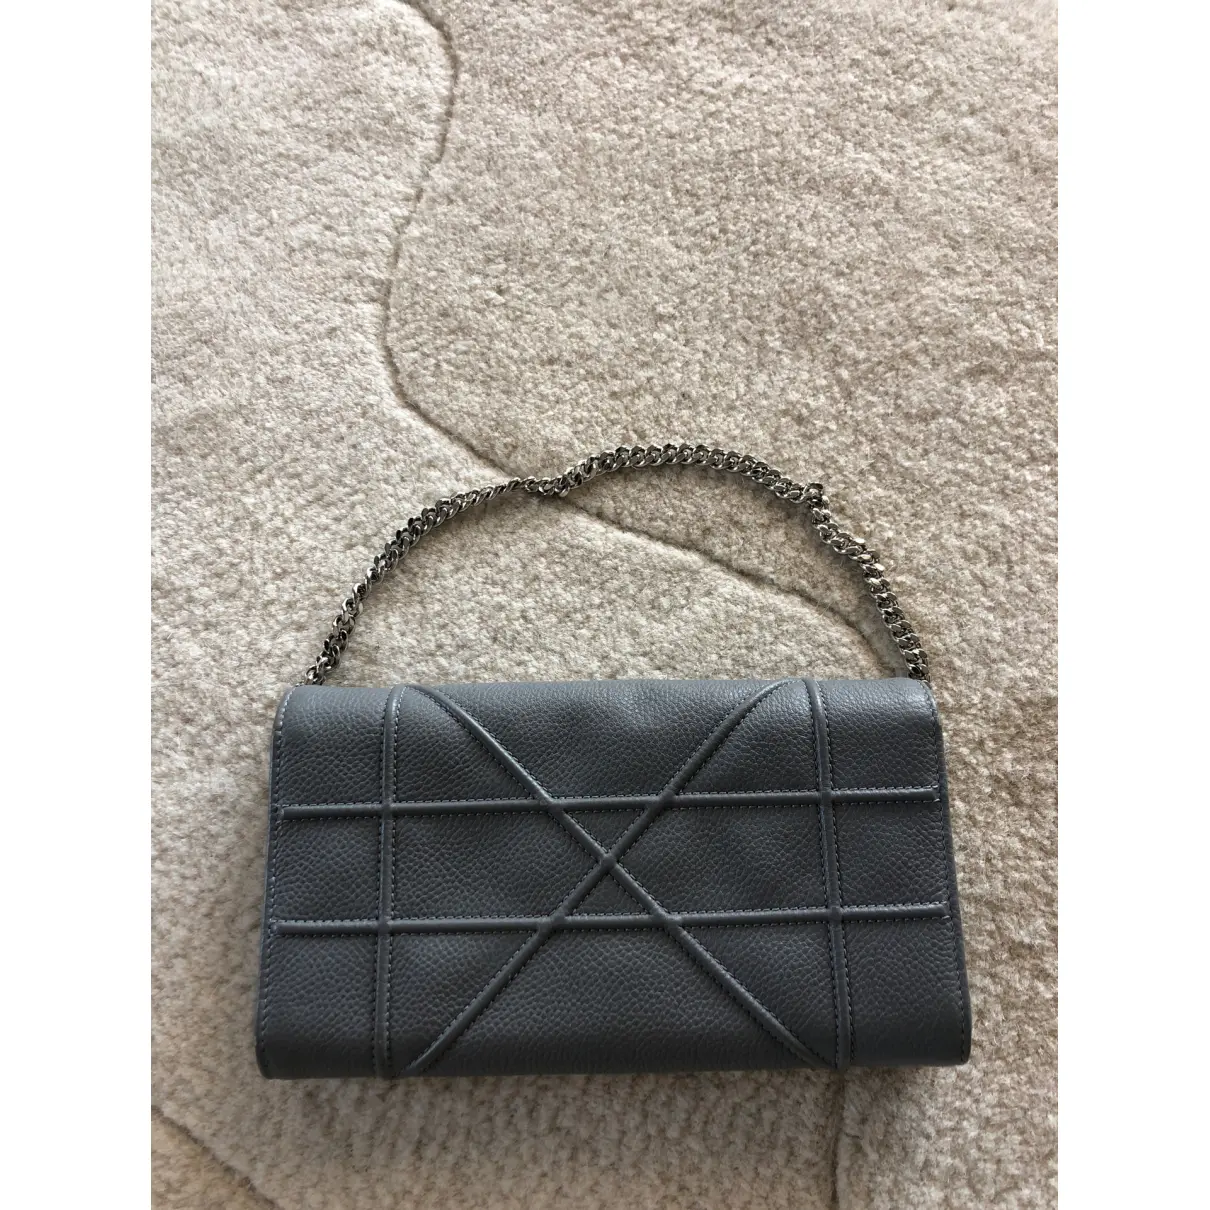 Buy Dior Diorama Croisière leather mini bag online